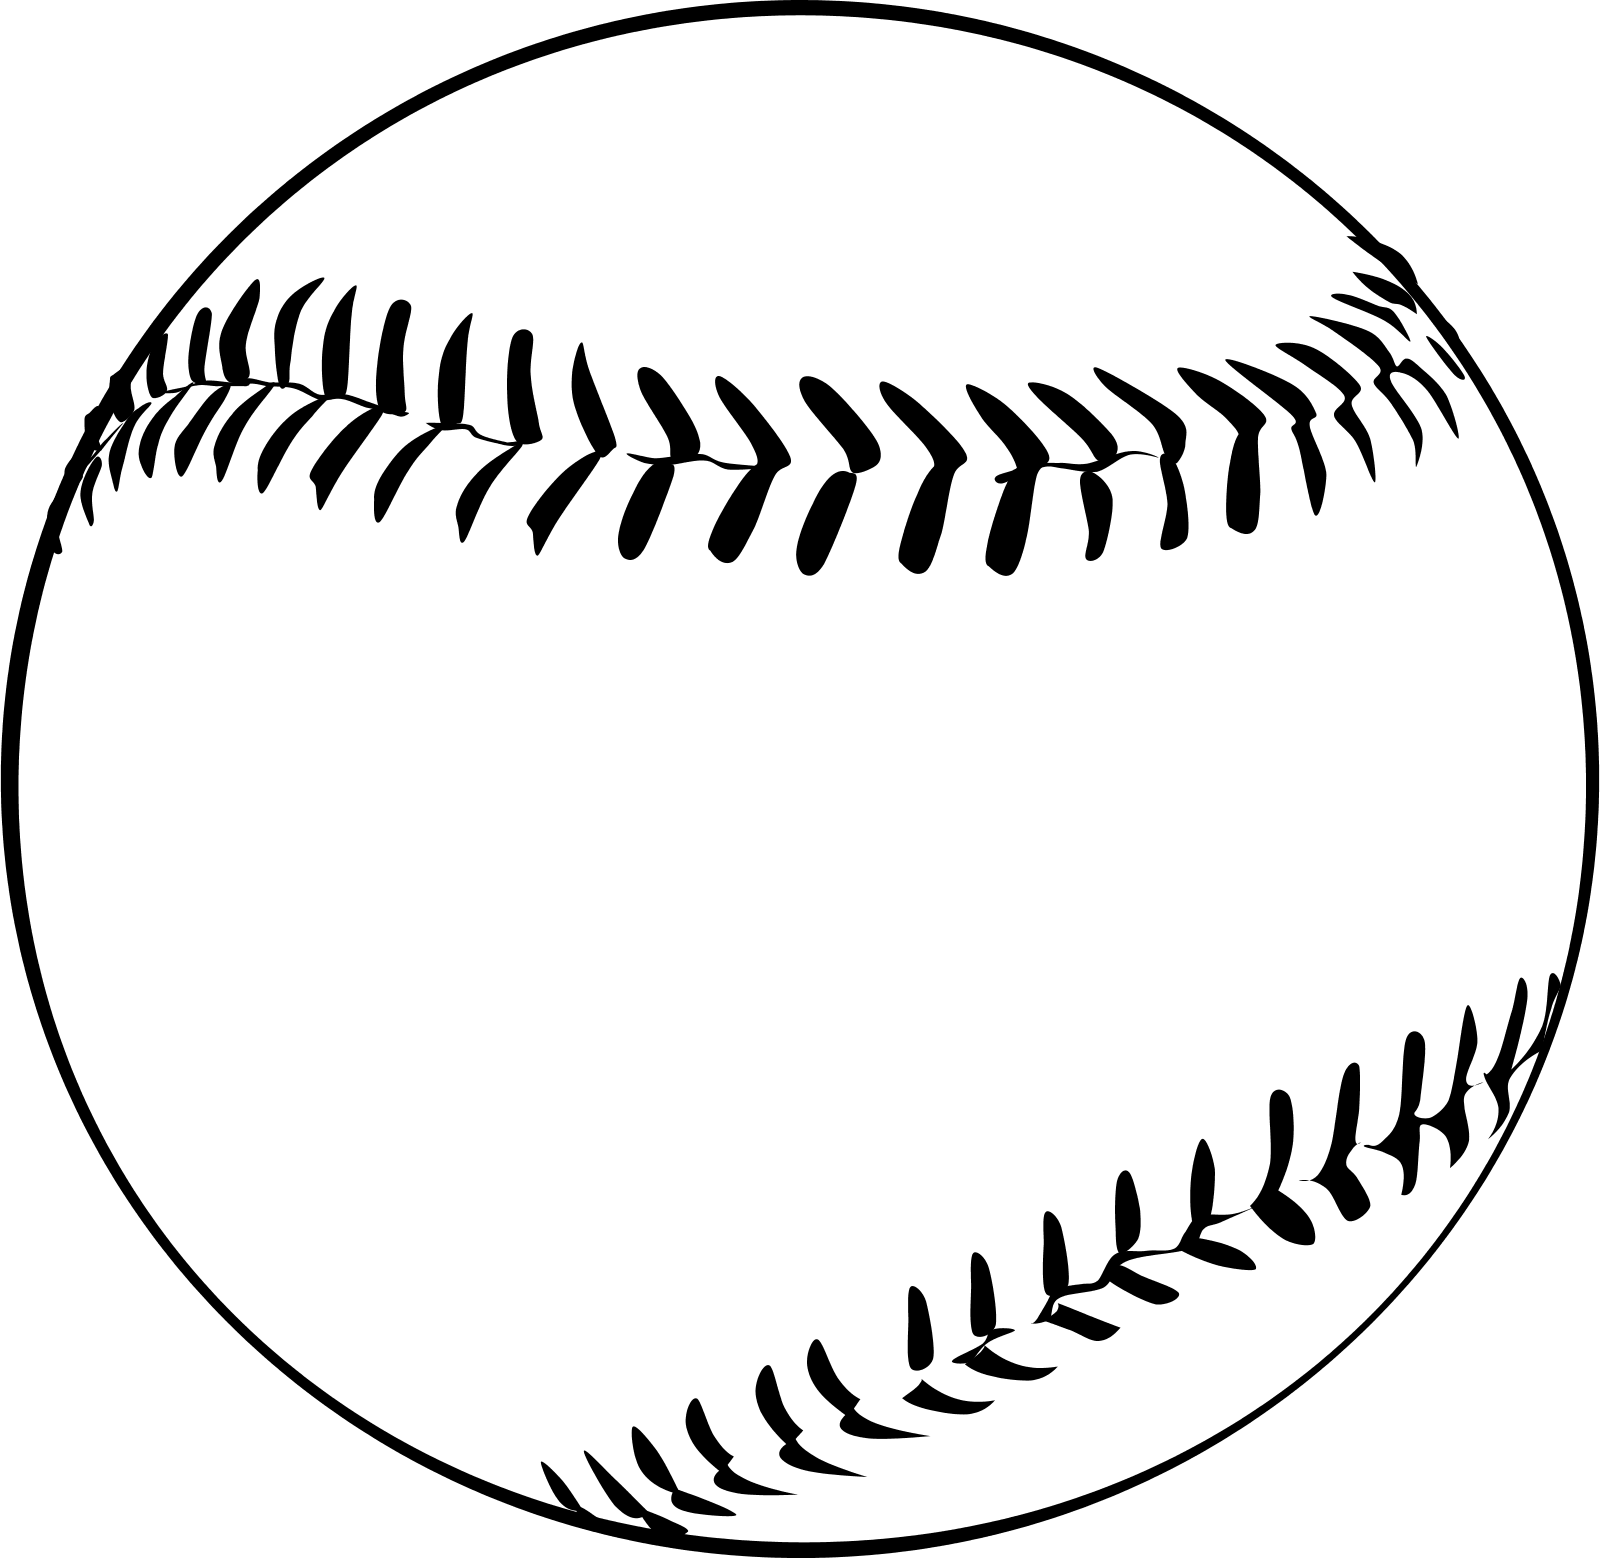 Images For > Softball Bat Clip Art Black And White